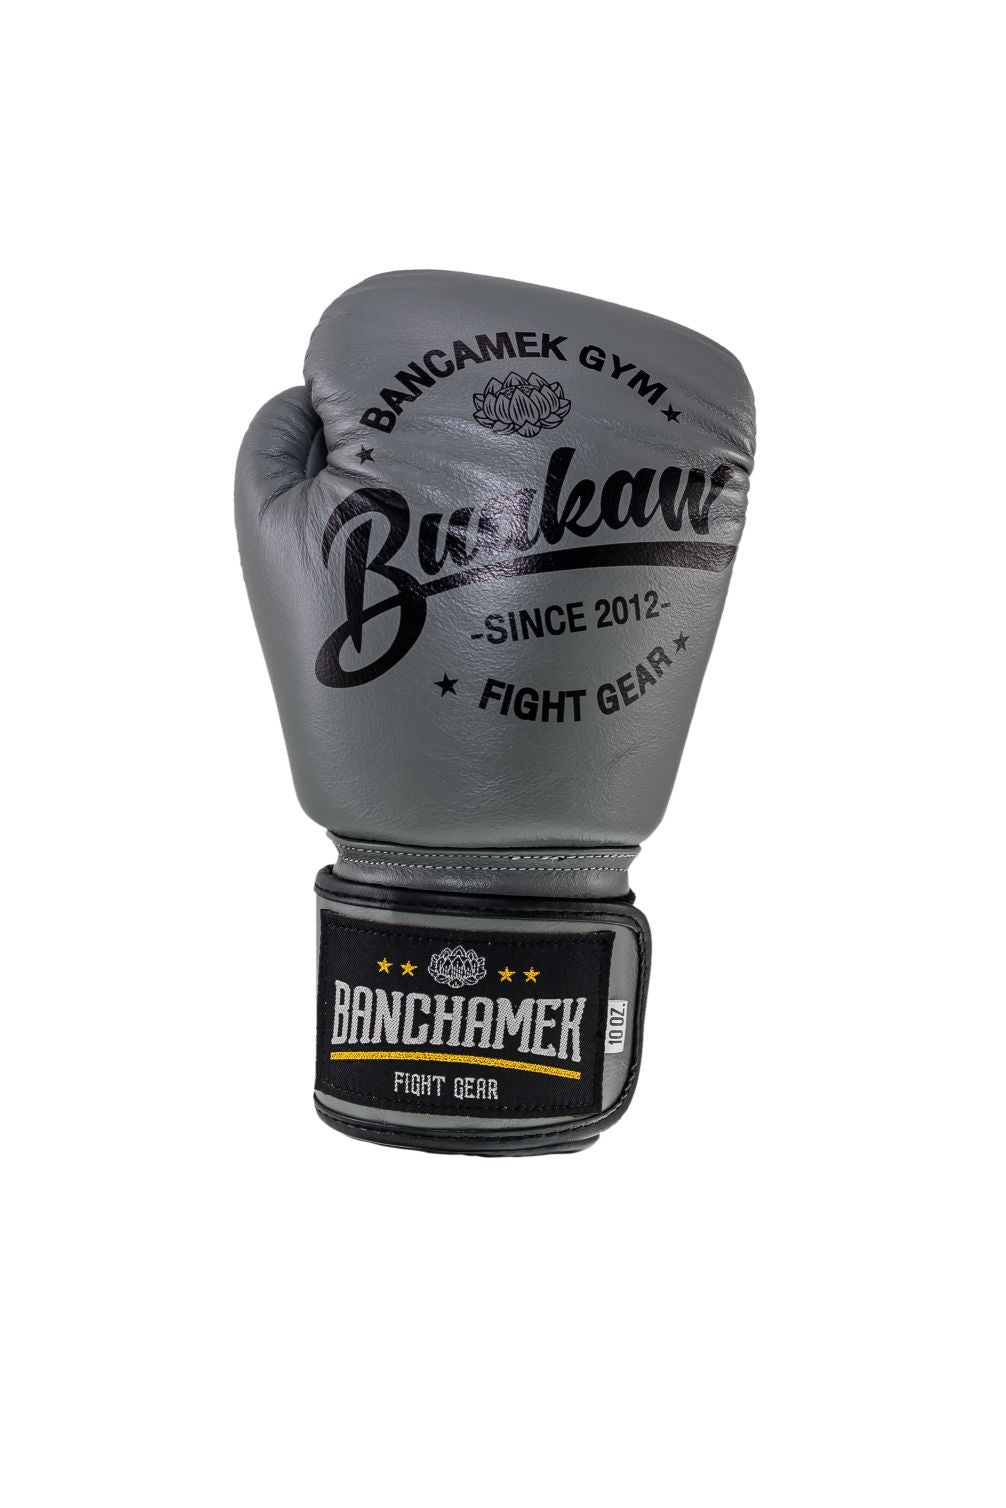 Buakaw Boxing Gloves BGL-W1 Grey - SUPER EXPORT SHOP